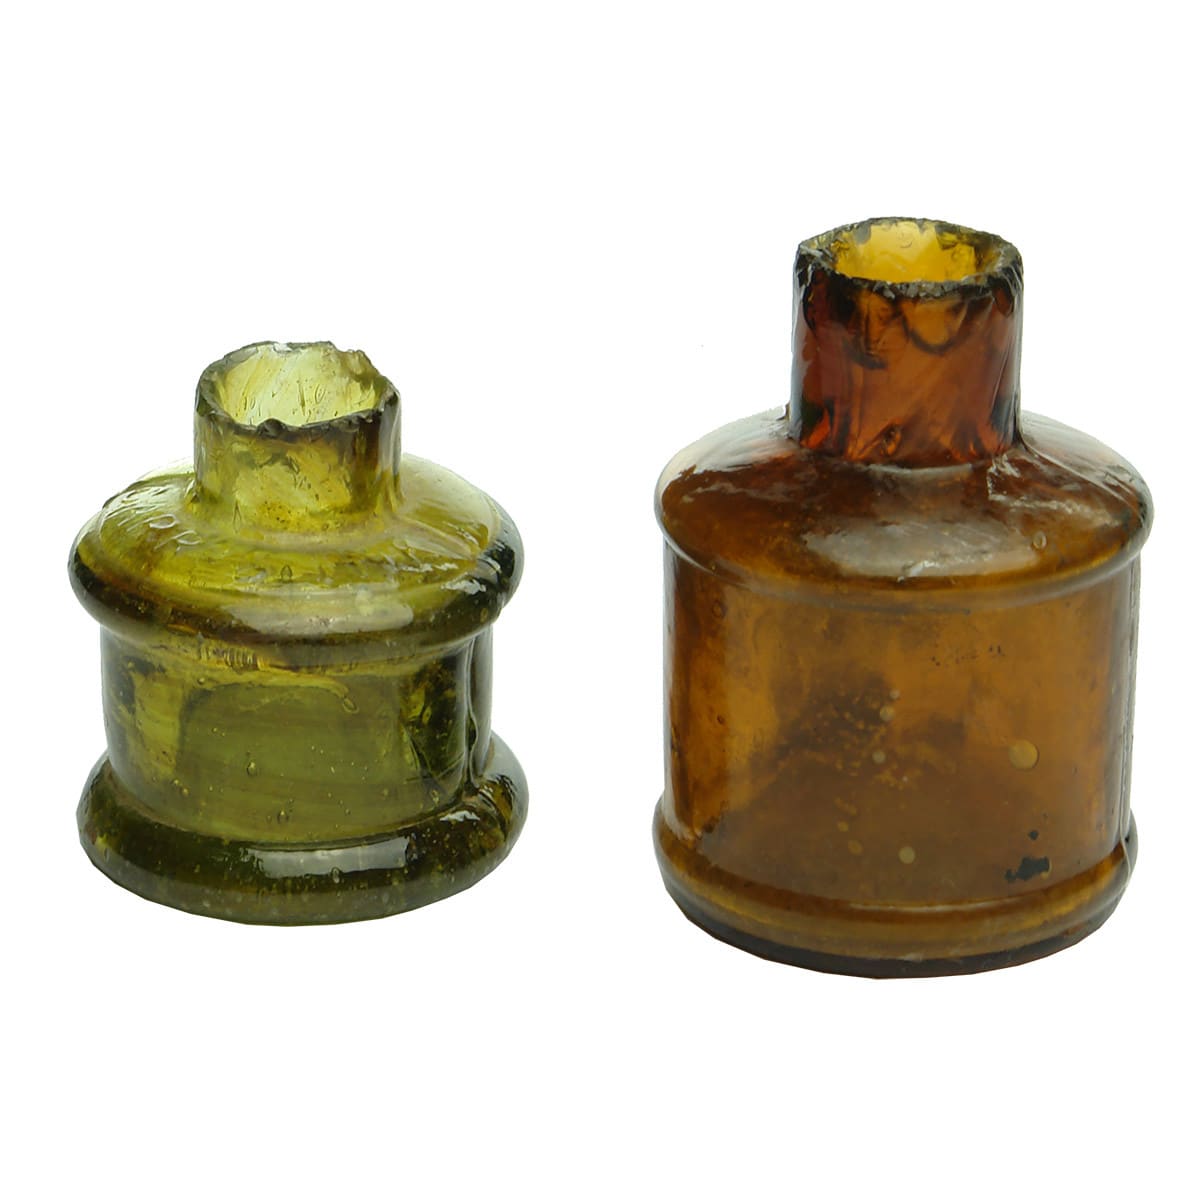 Pair of Inks: Amber Cotton reel type; Honey/Lemonish coloured Carr's Ink.